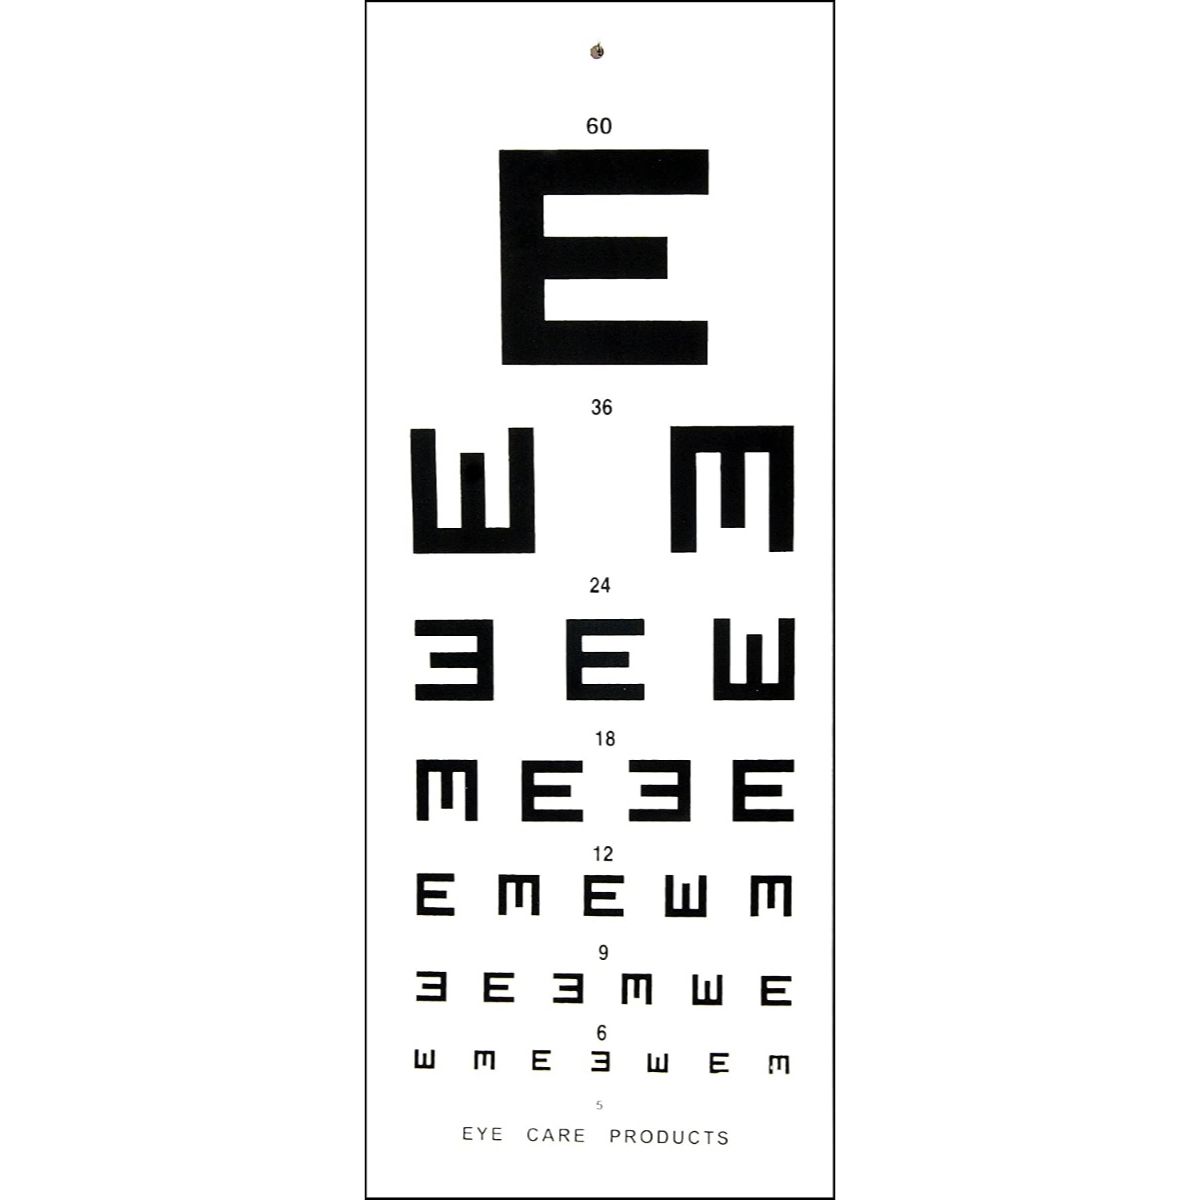 random e test is similar to snellen eye chart